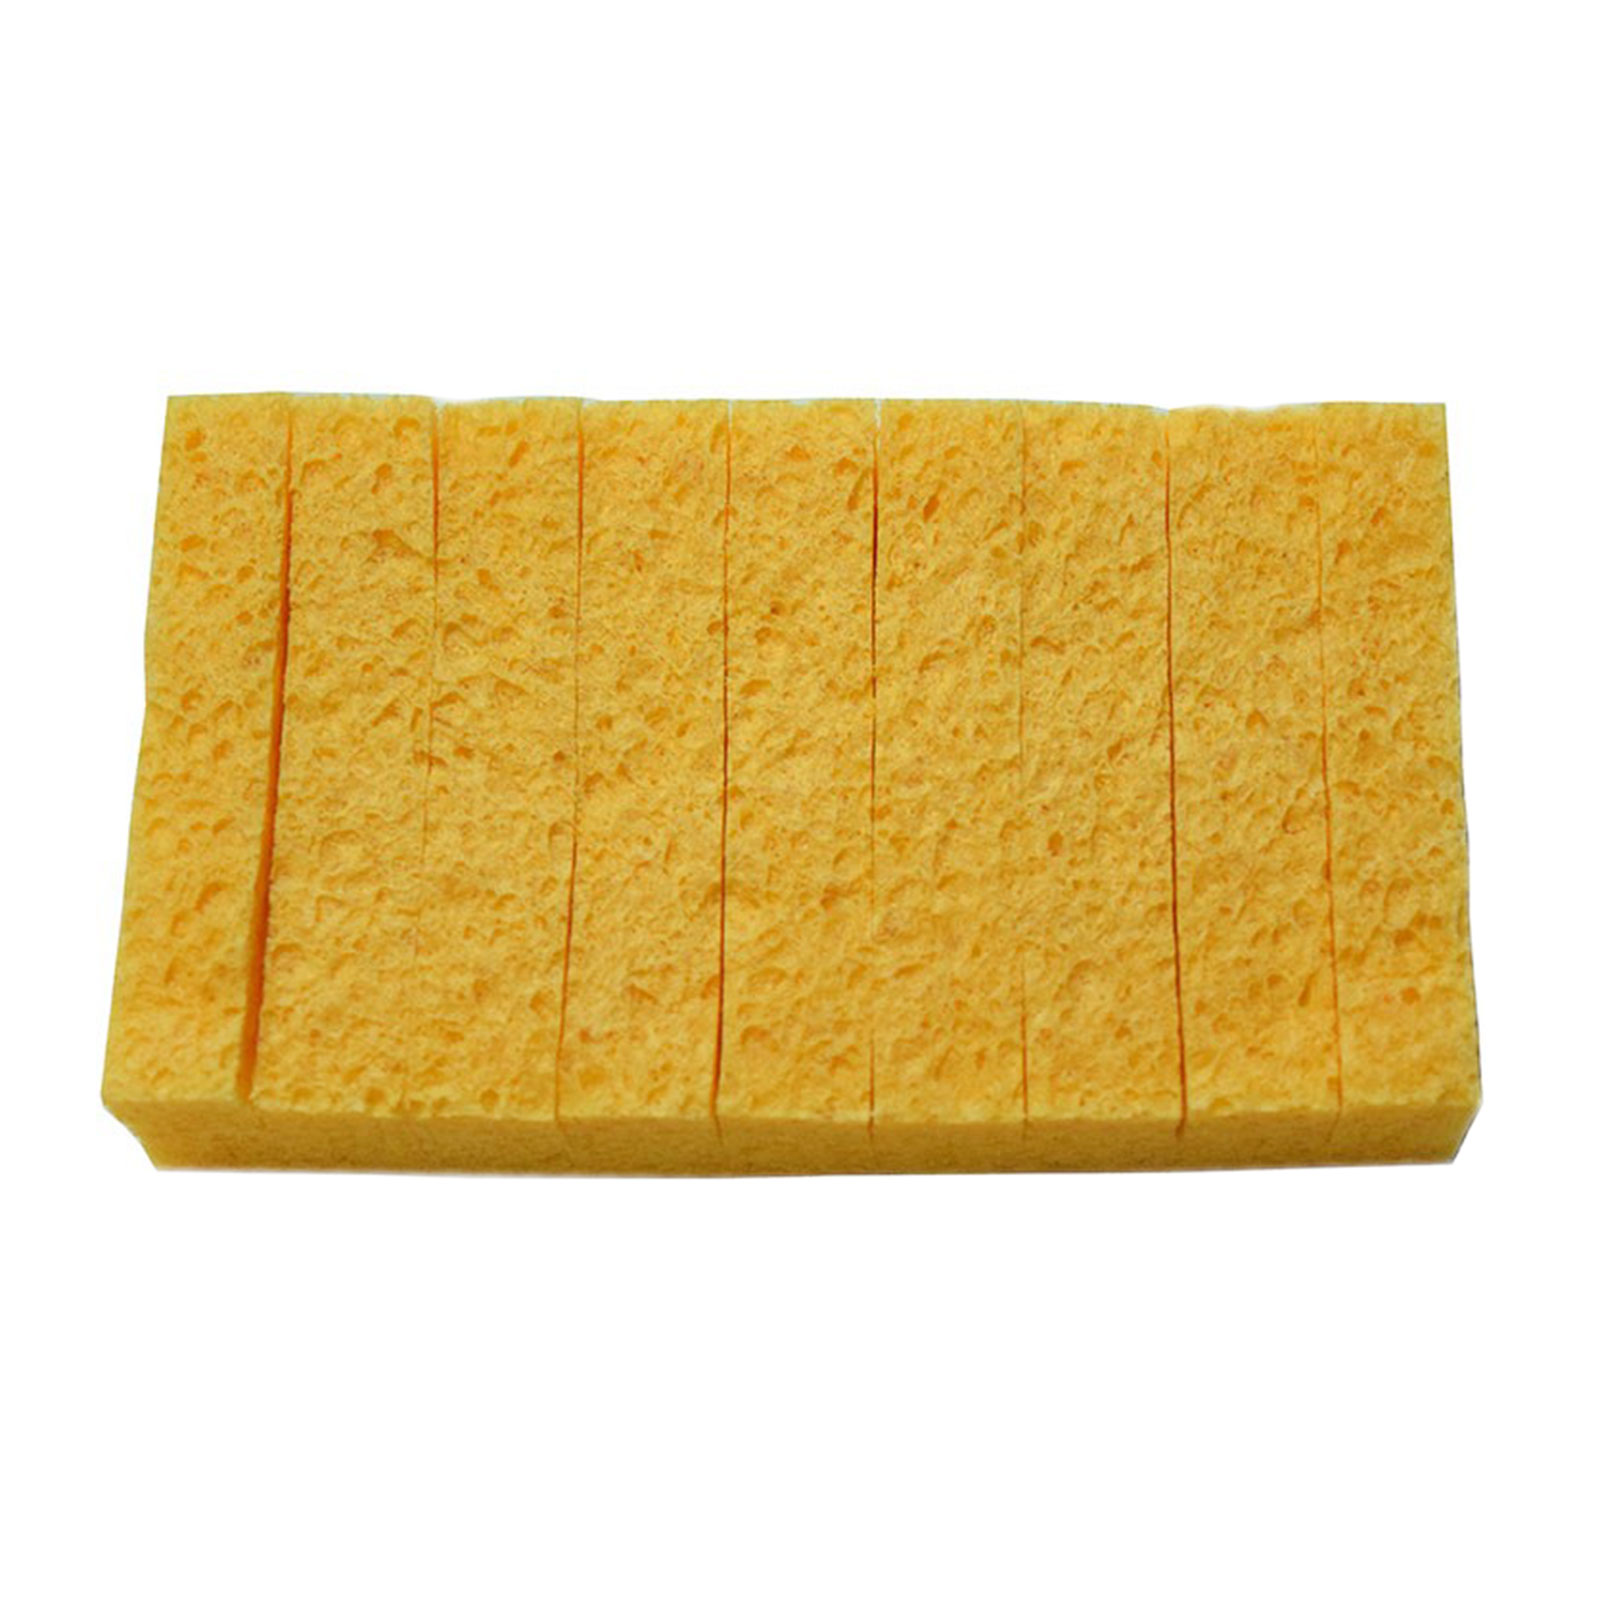 Multiple Slits Solder Sponge For Use With Soldering Irons, Workstands 4.50